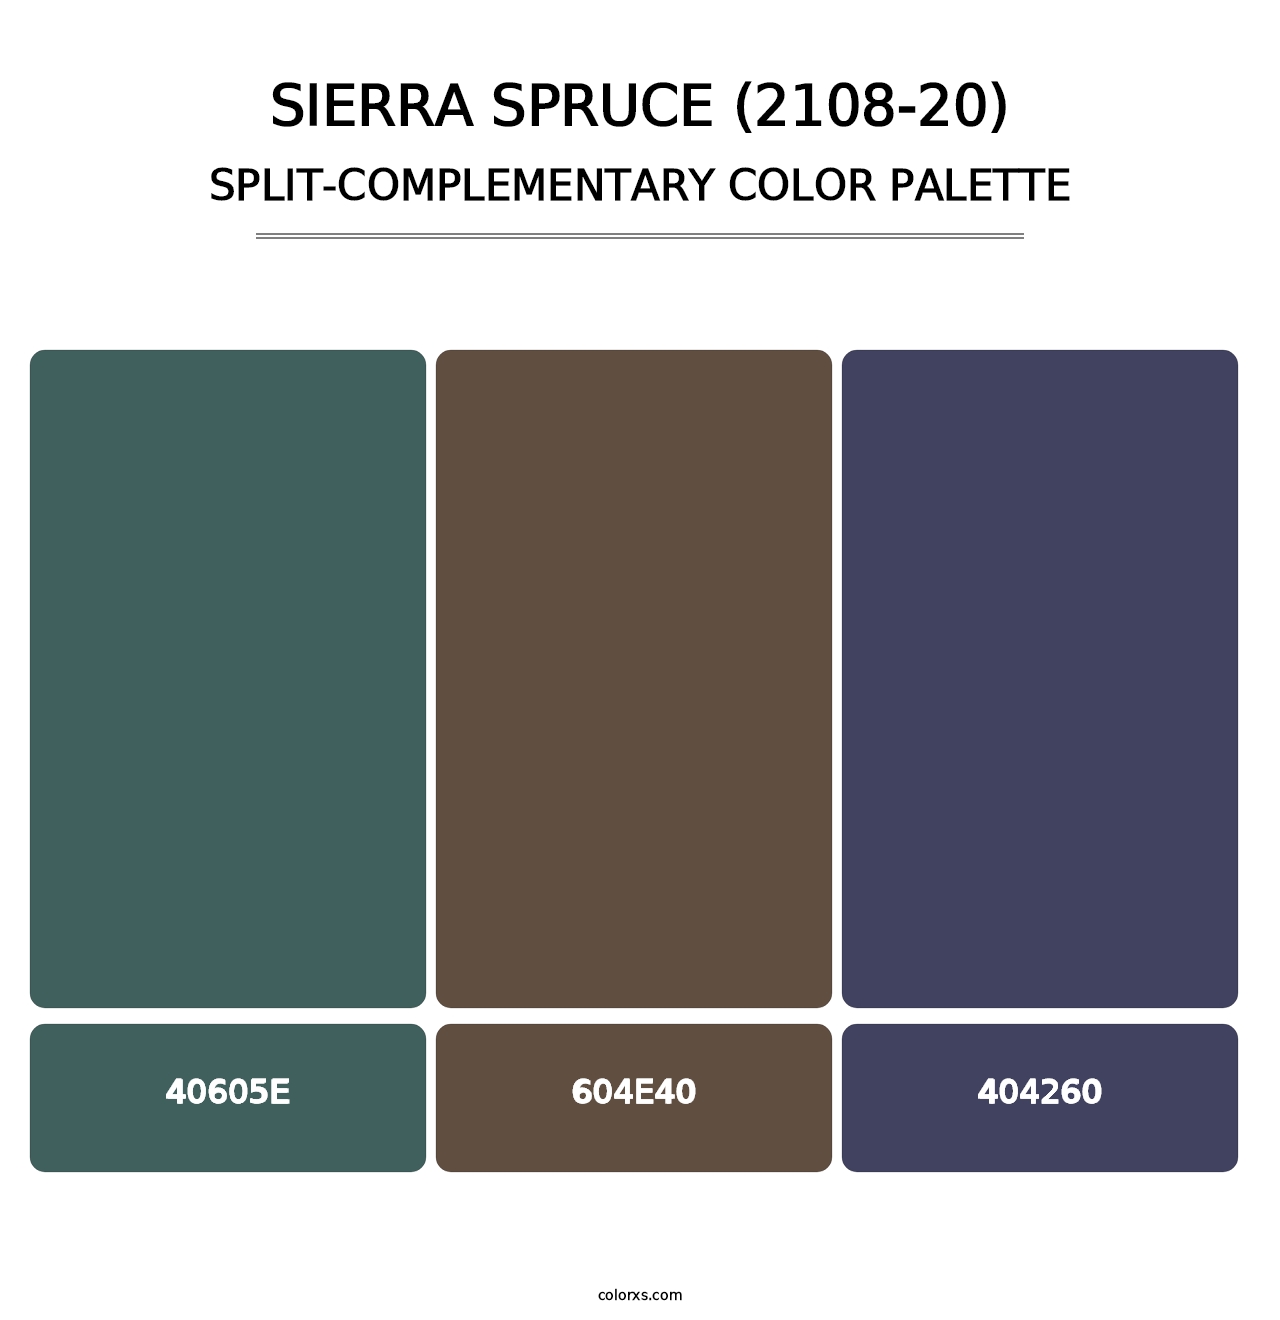 Sierra Spruce (2108-20) - Split-Complementary Color Palette